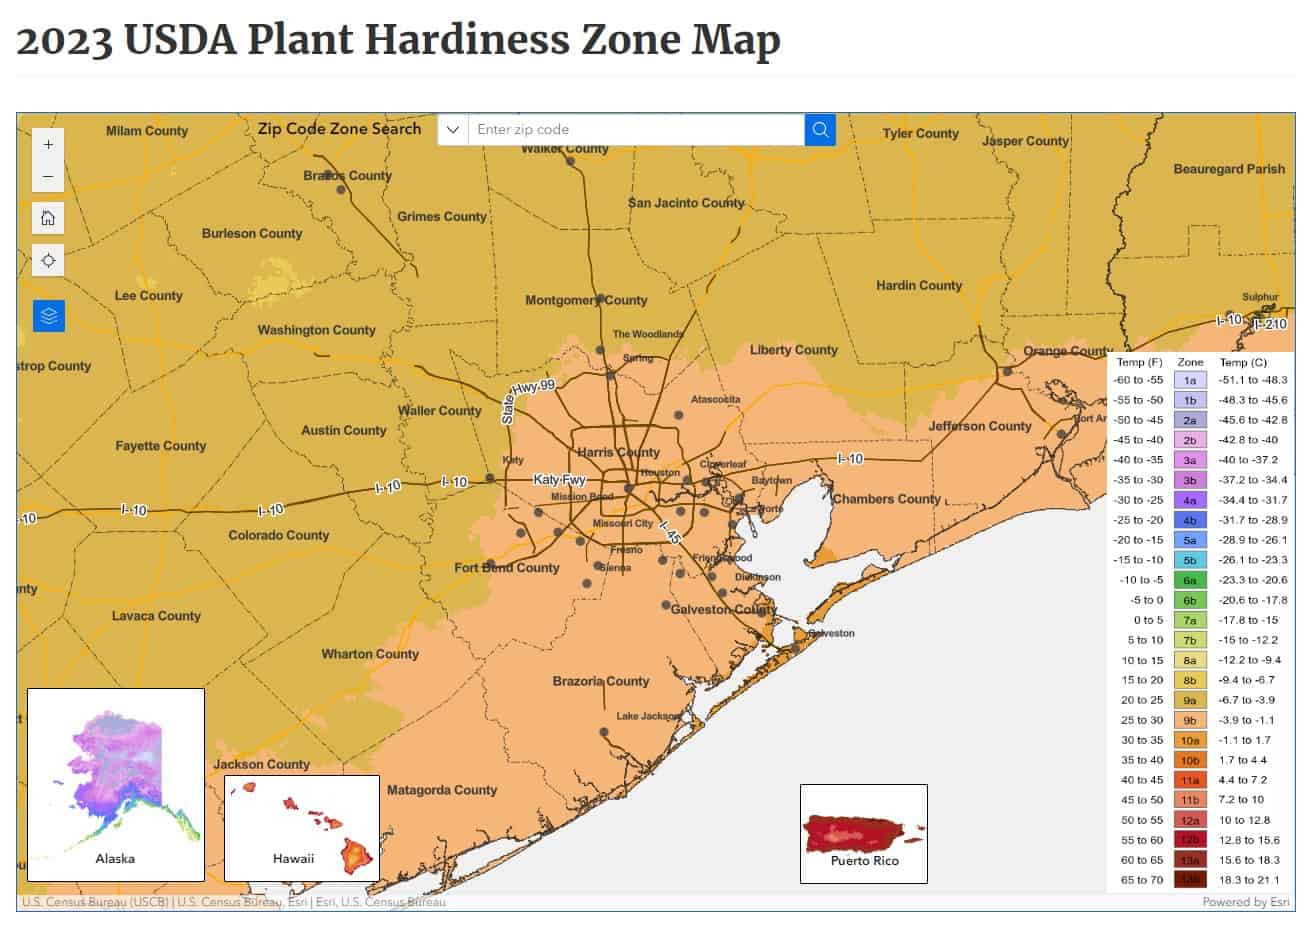 1_2023 USDA Plant Hardiness Zone Map screenshot (1)